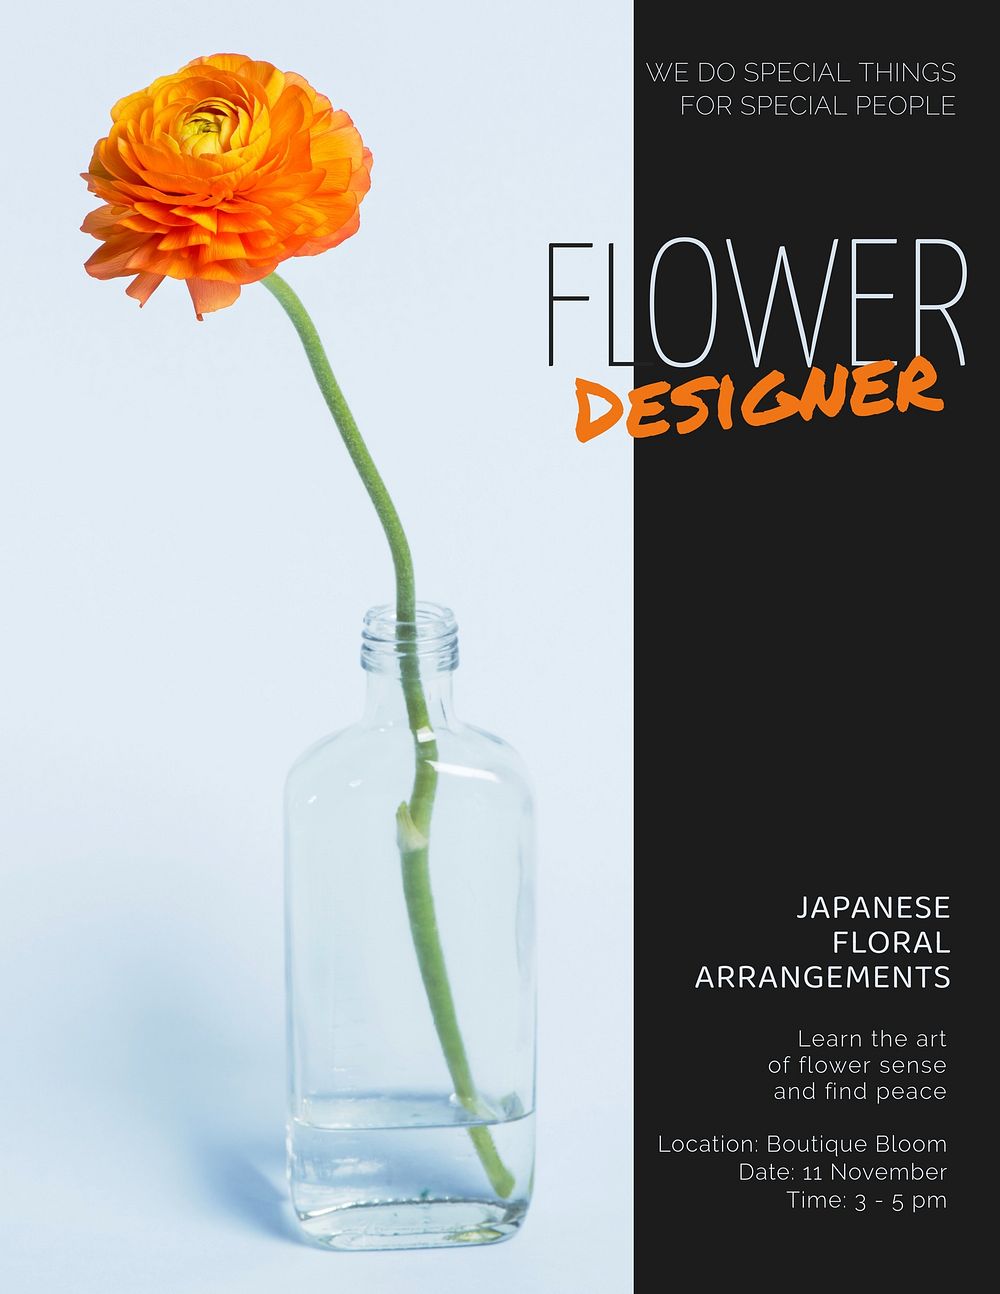 Flower designer flyer editable template, event advertisement